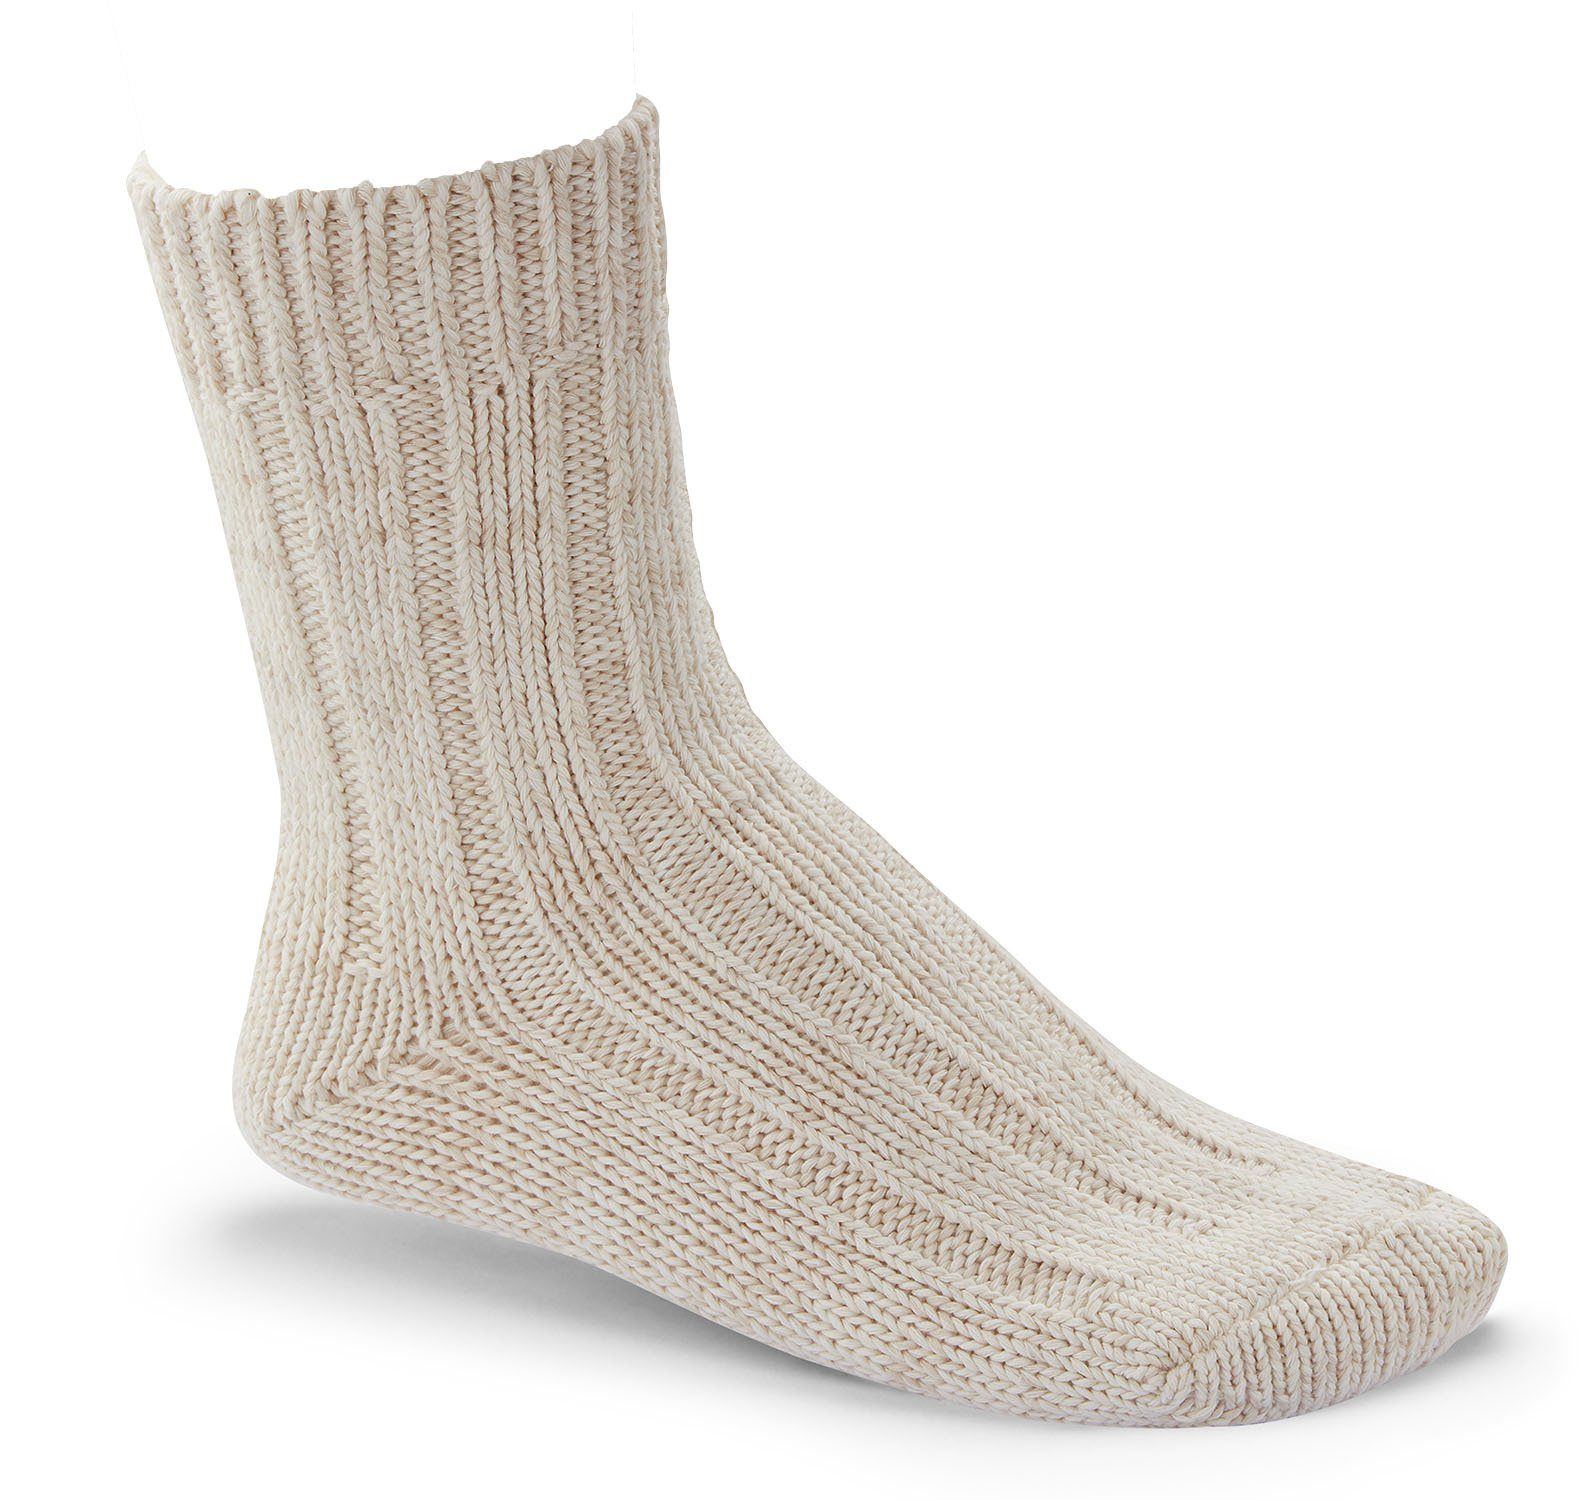 Birkenstock Kurzsocken Damen Socken - Strumpf, Cotton Twist Weiß